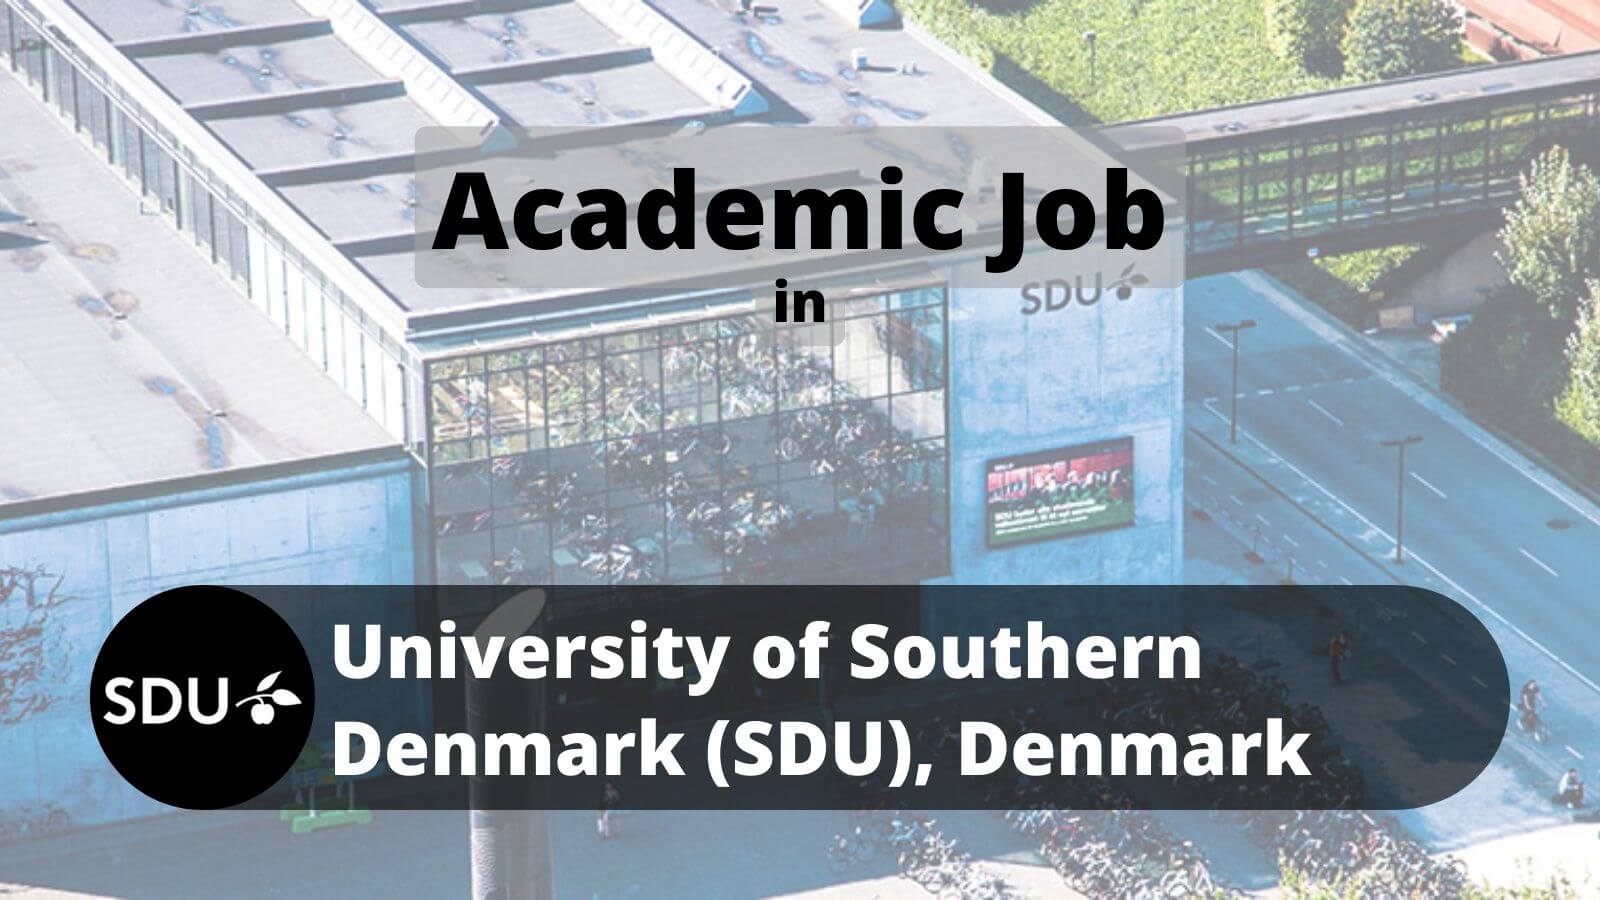 Academic Job in SDU University of Southern Denmark